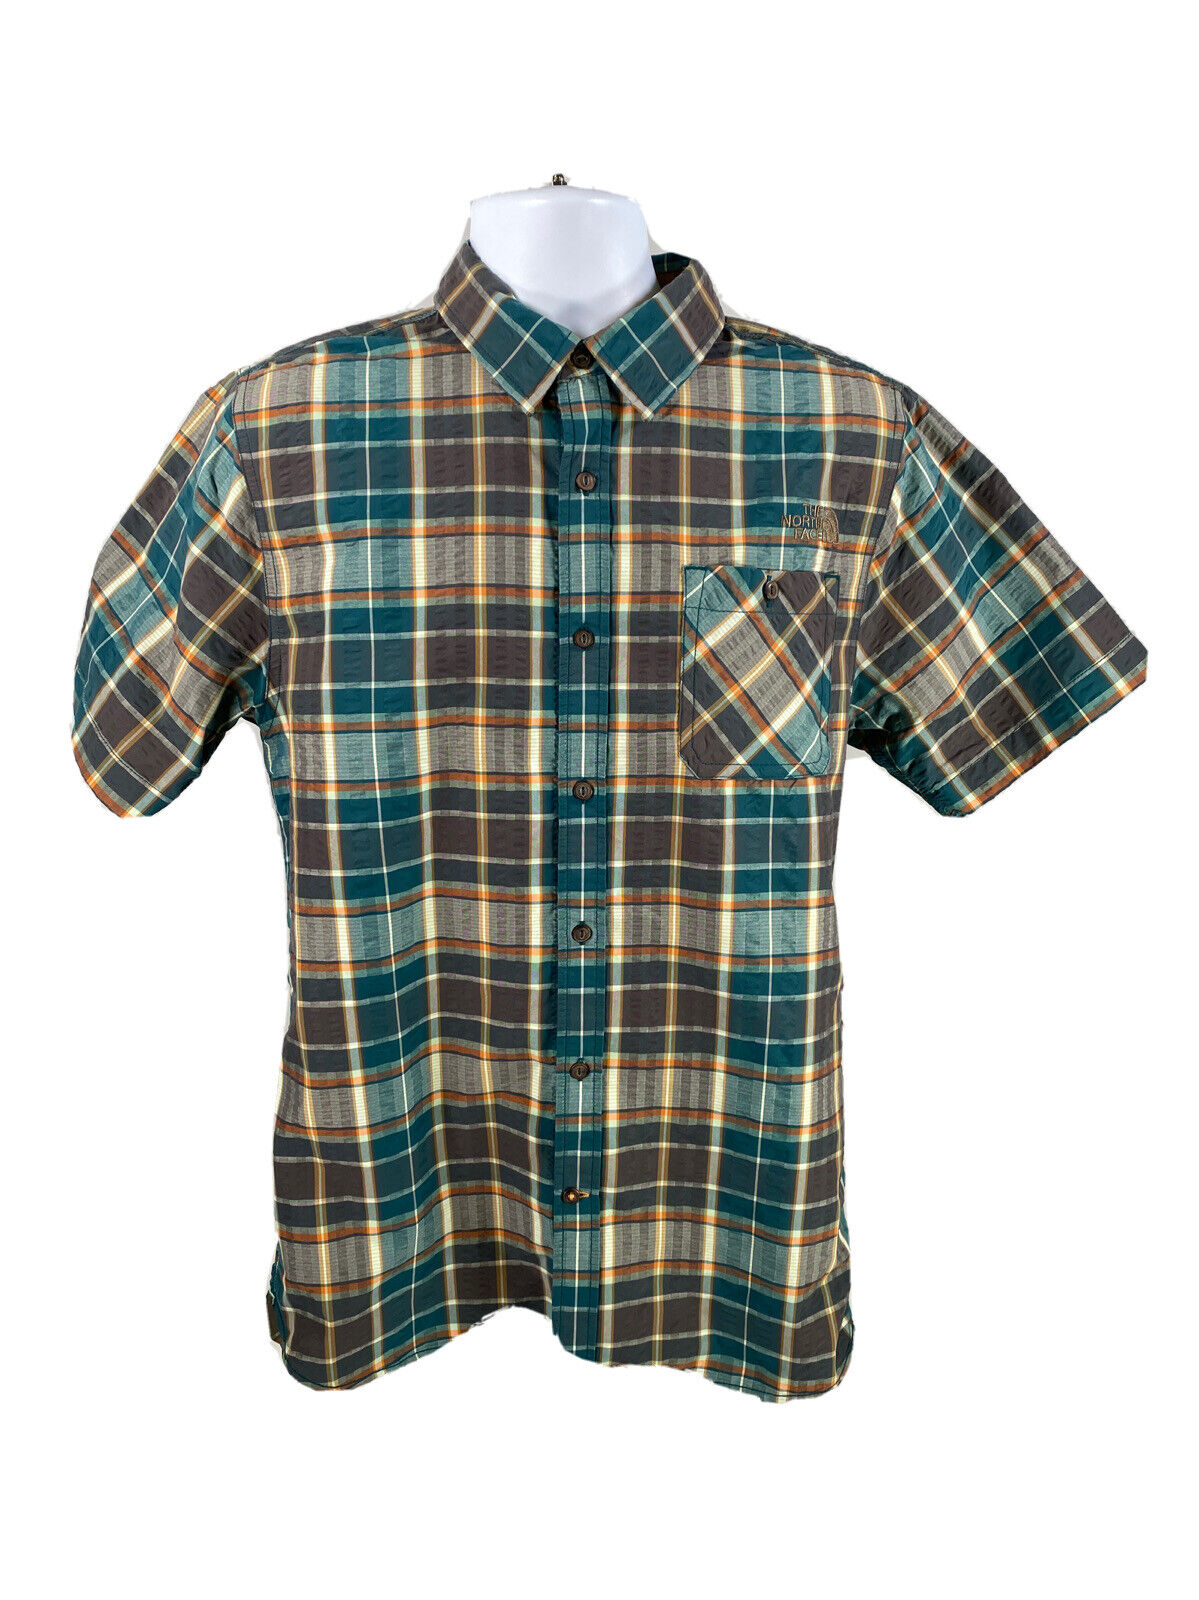 The North Face Men's Blue Plaid Short Sleeve Nylon Button Up Shirt - L